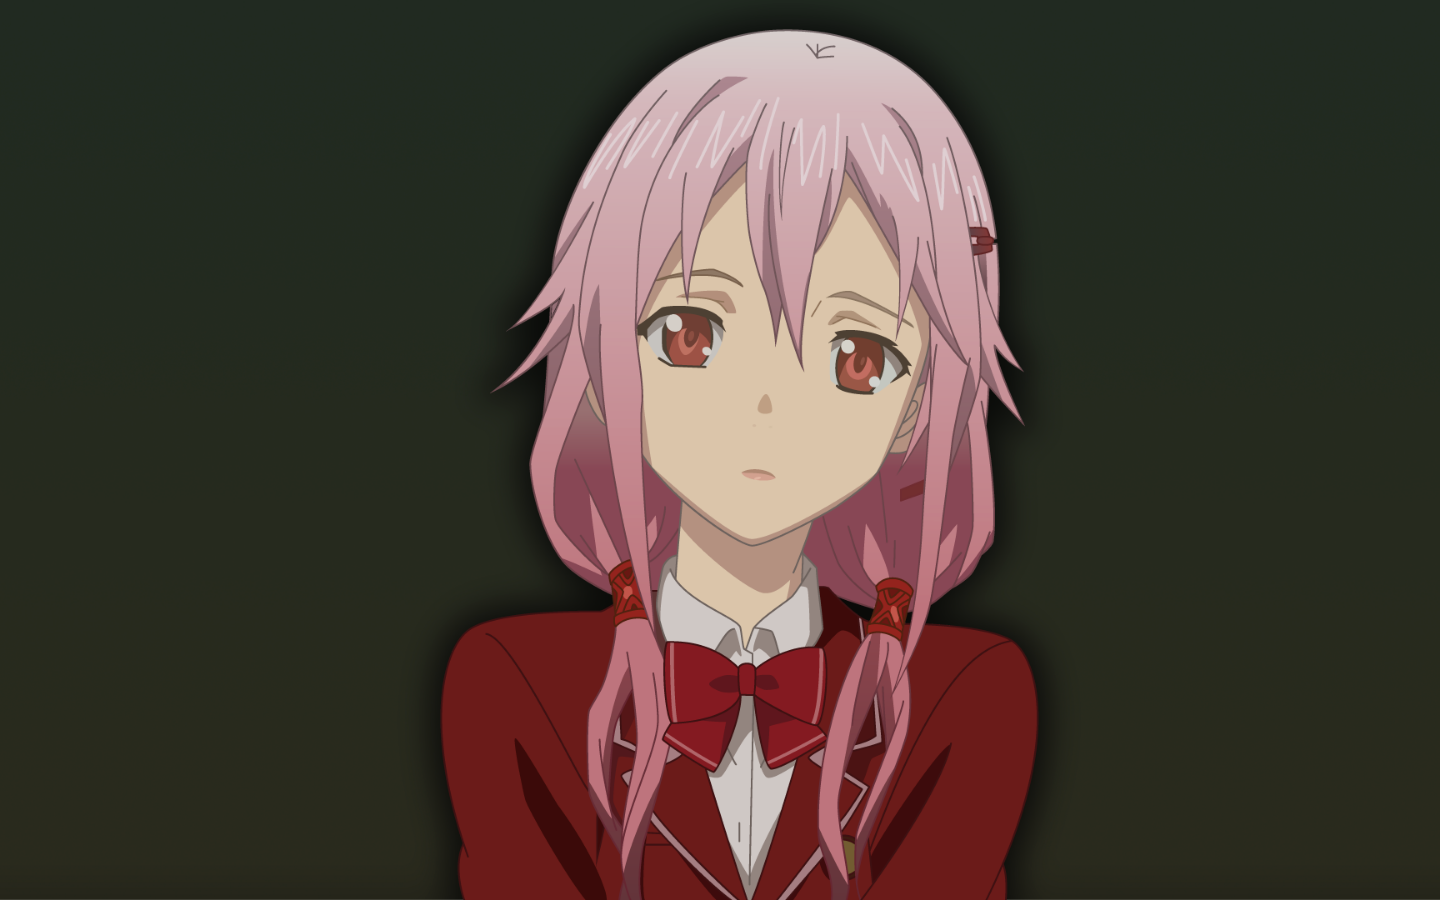 Animation Animation Lee Guilty Crown Pink Hair Red Eyes Yuzuriha Inori School Uniform Frontal View S 1440x900